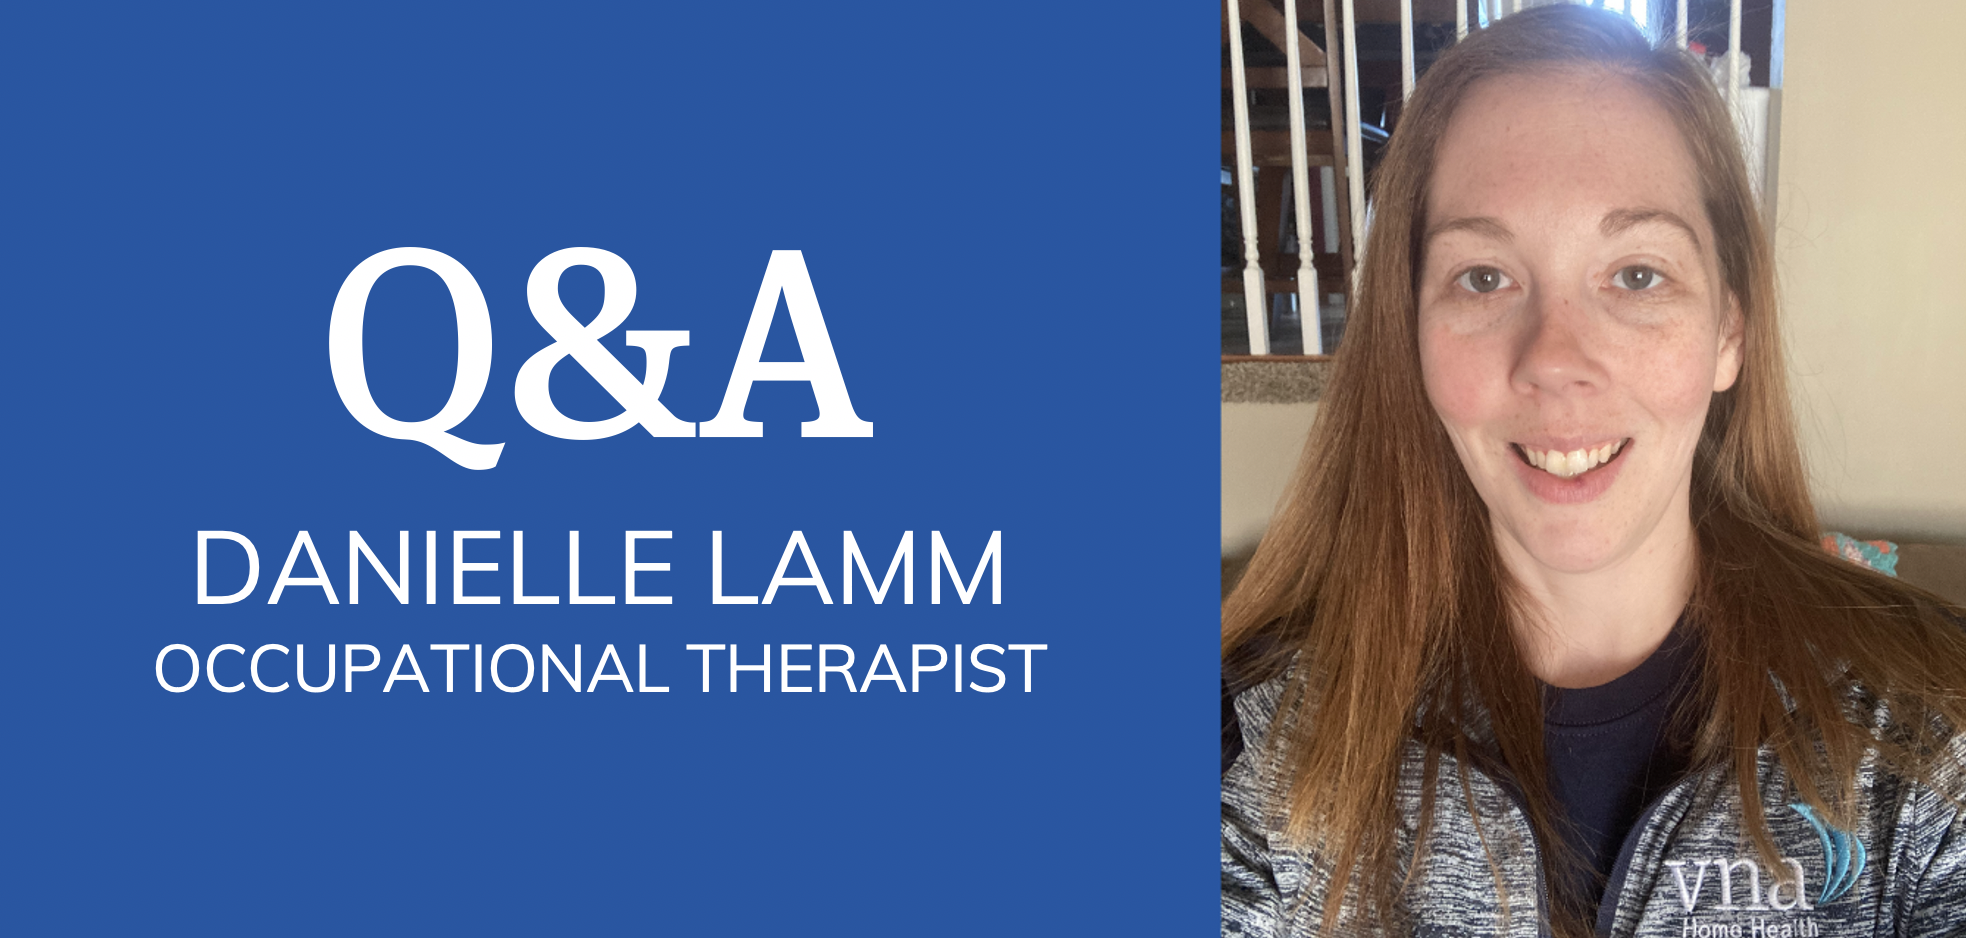 VNA staff feature Danielle Lamm OT Occupational Therapist